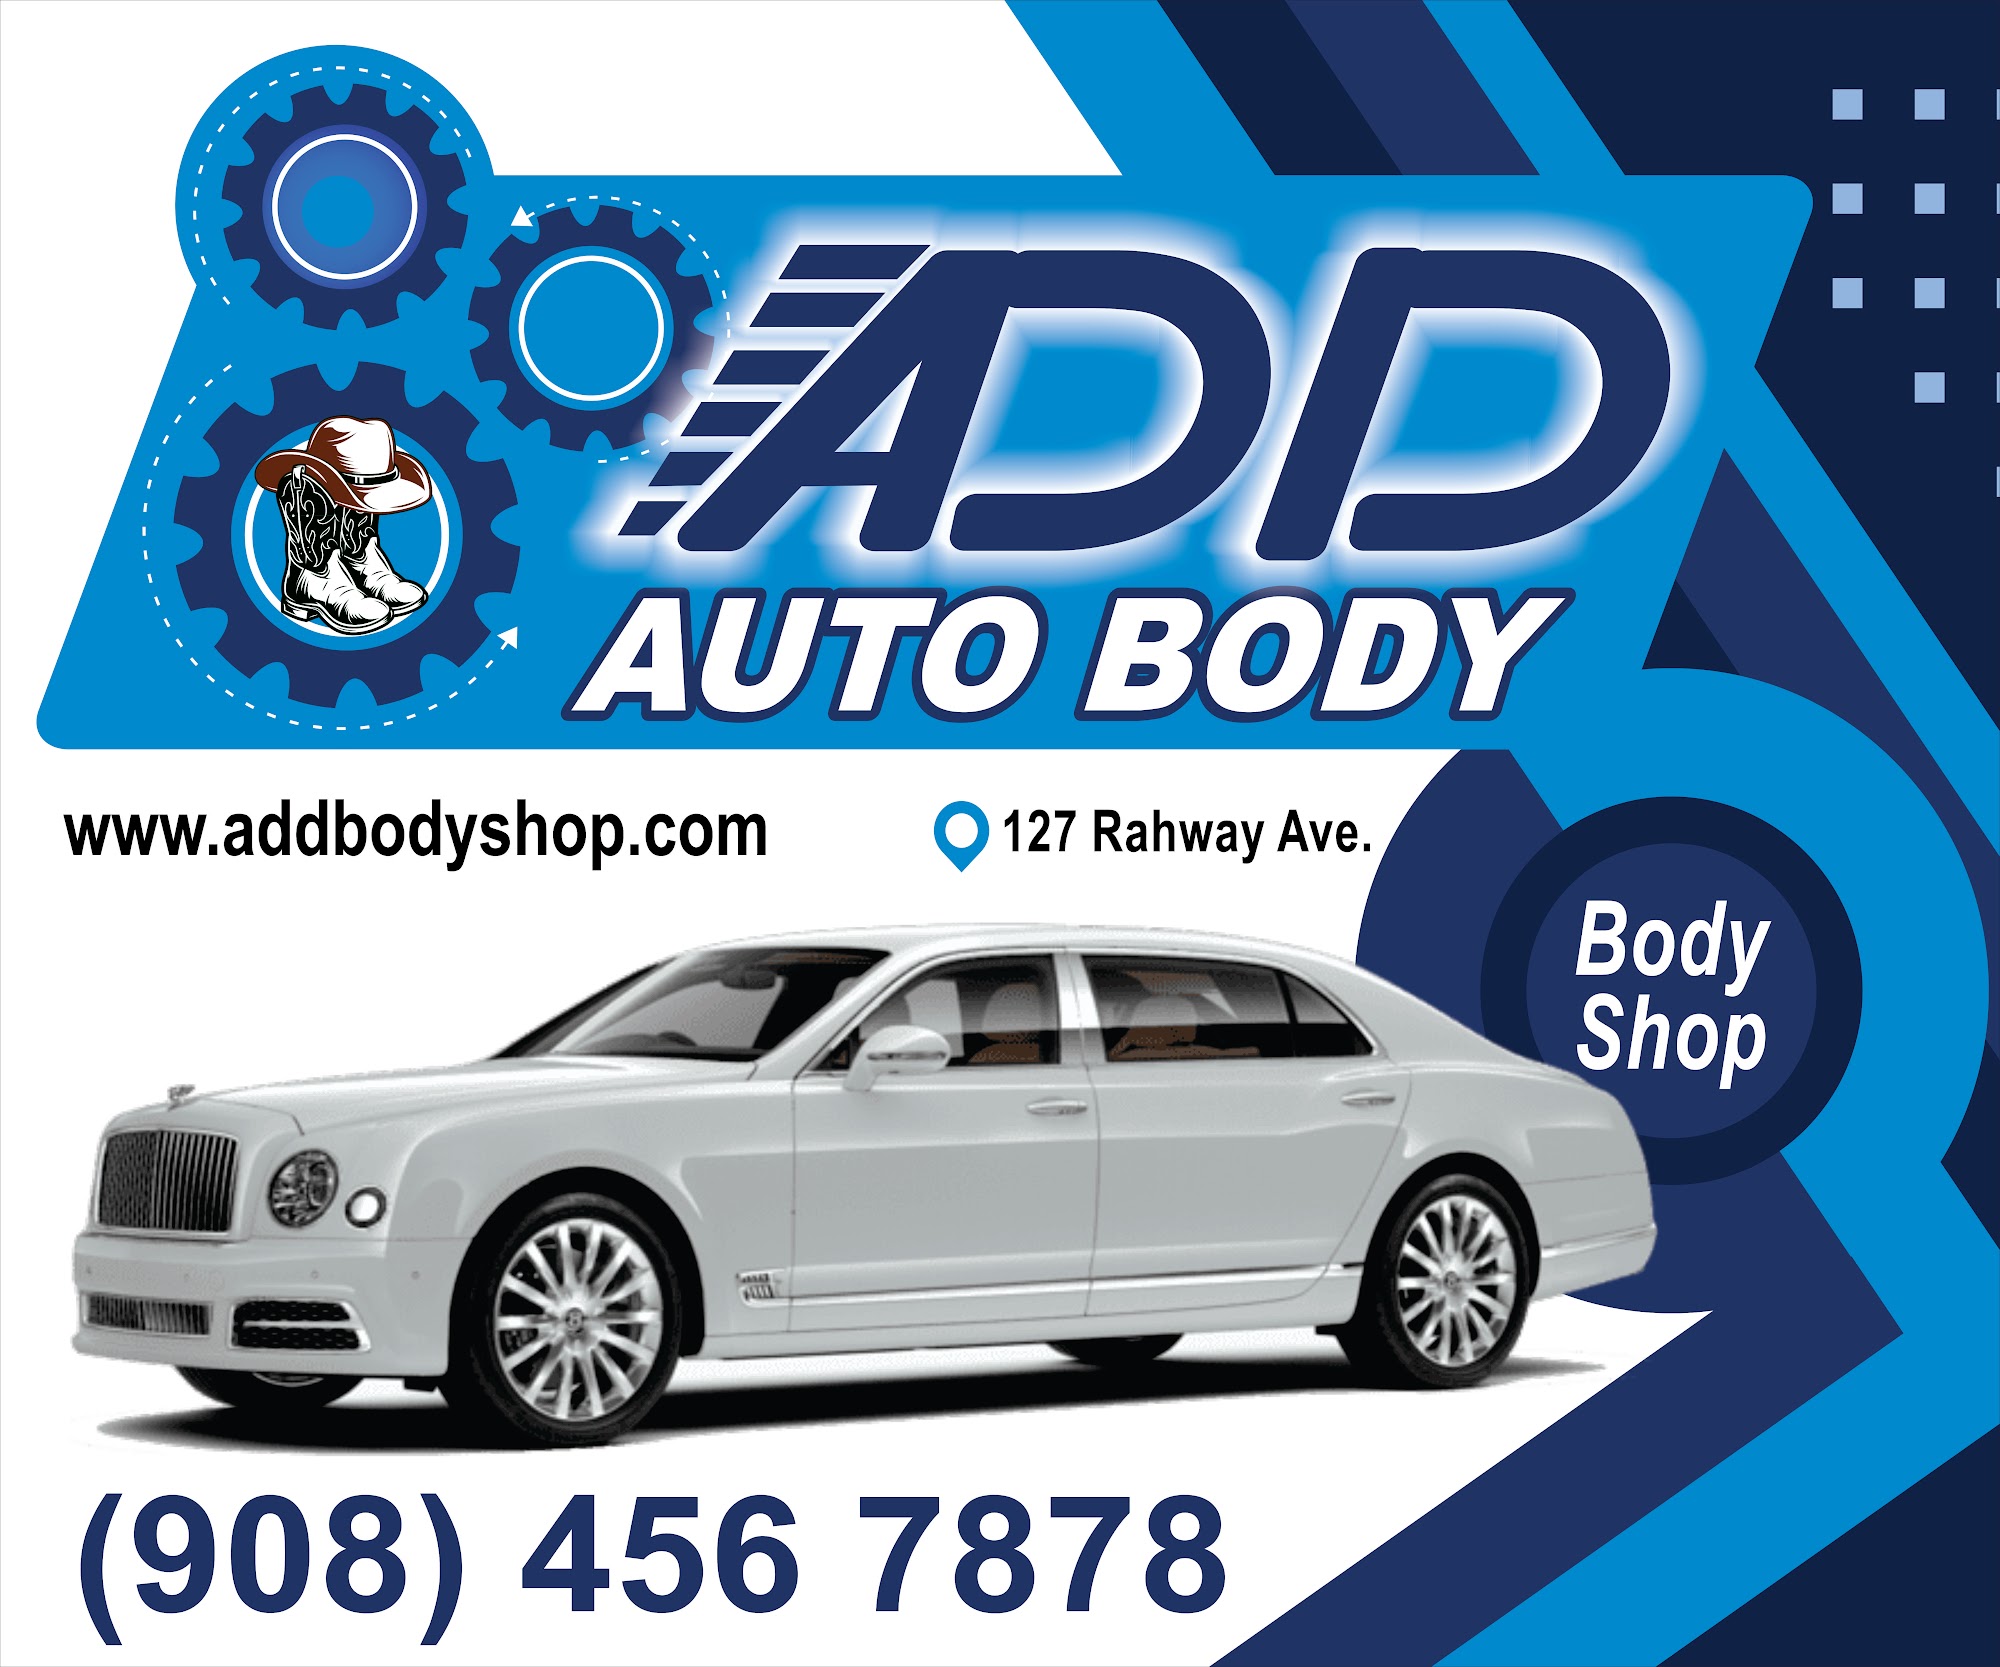 ADD Auto Body and Mechanic 9084567878